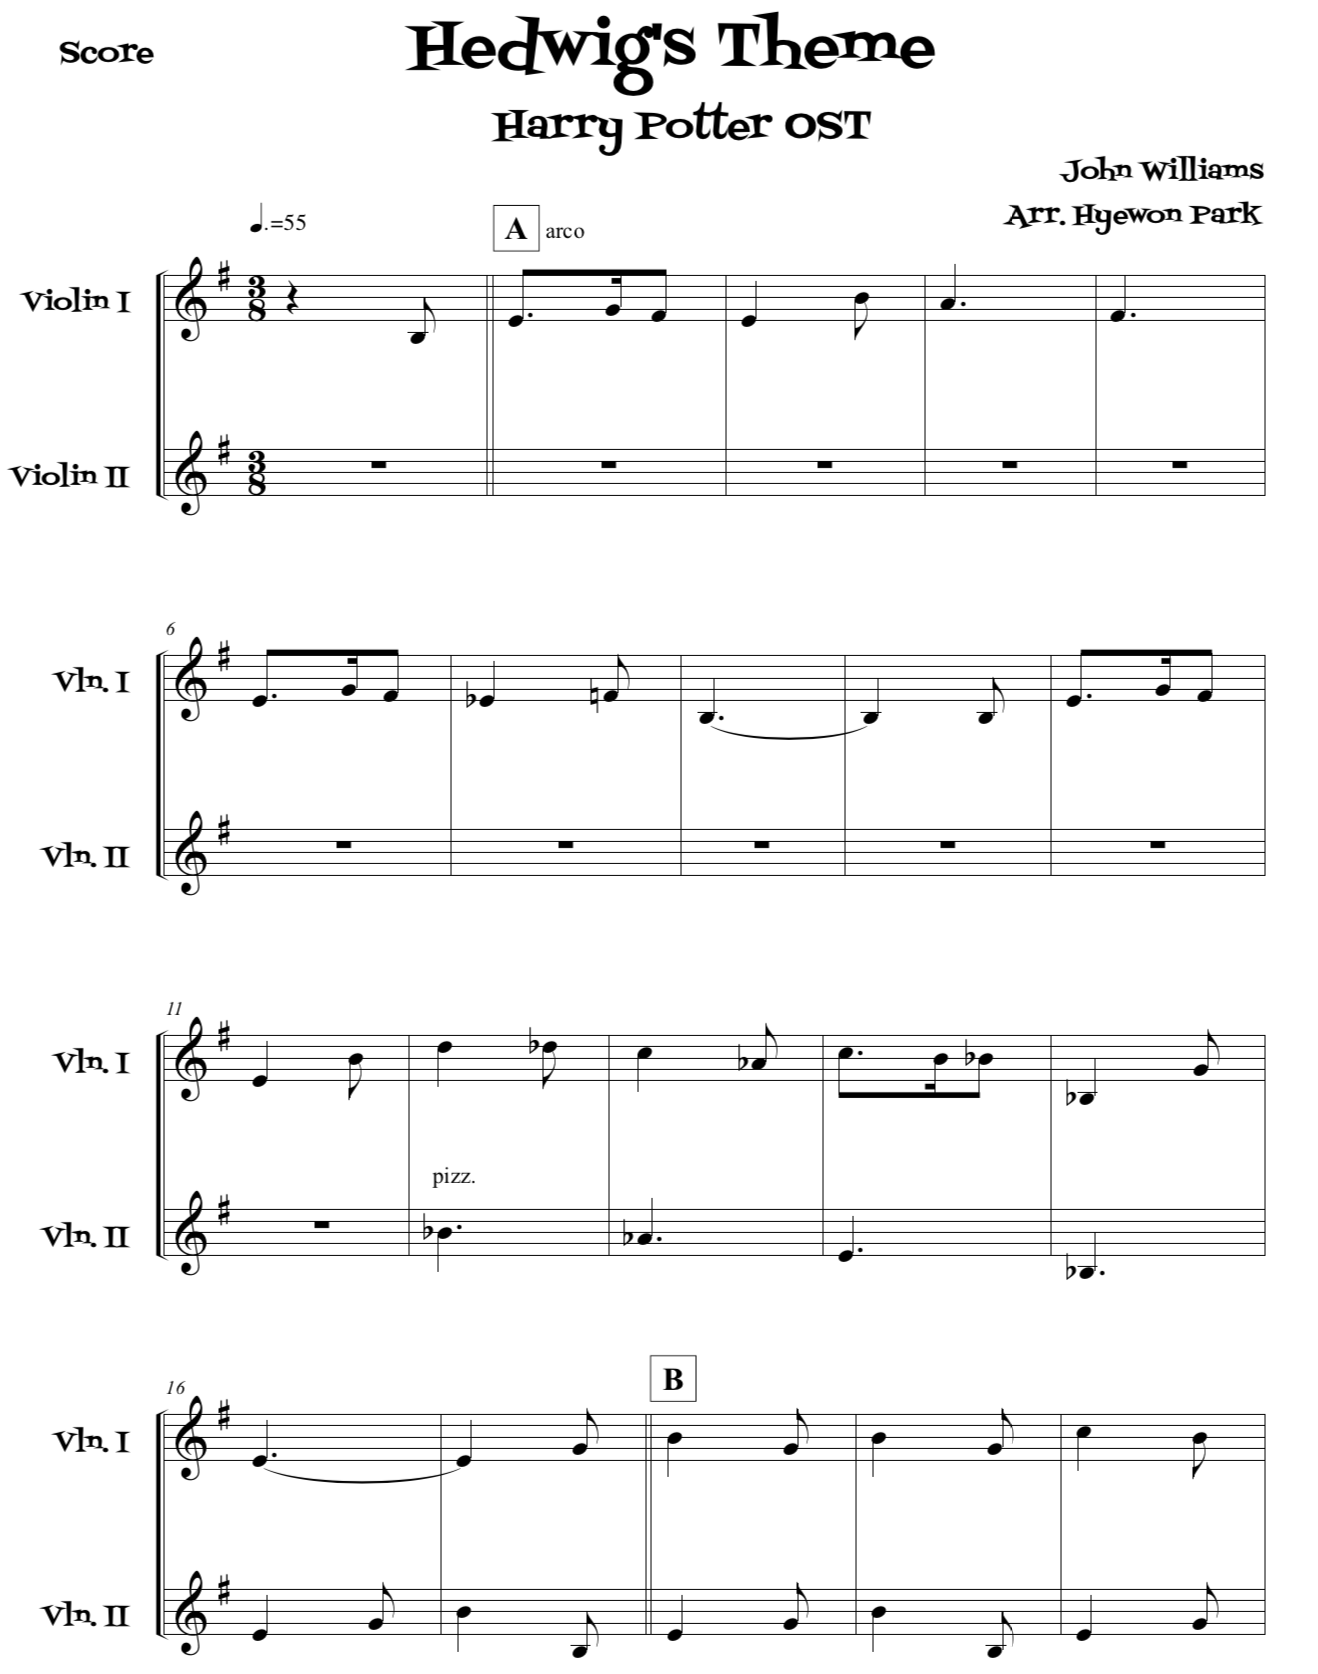 Hedwig's Theme (해리포터 OST) 바이올린 2중주 악보